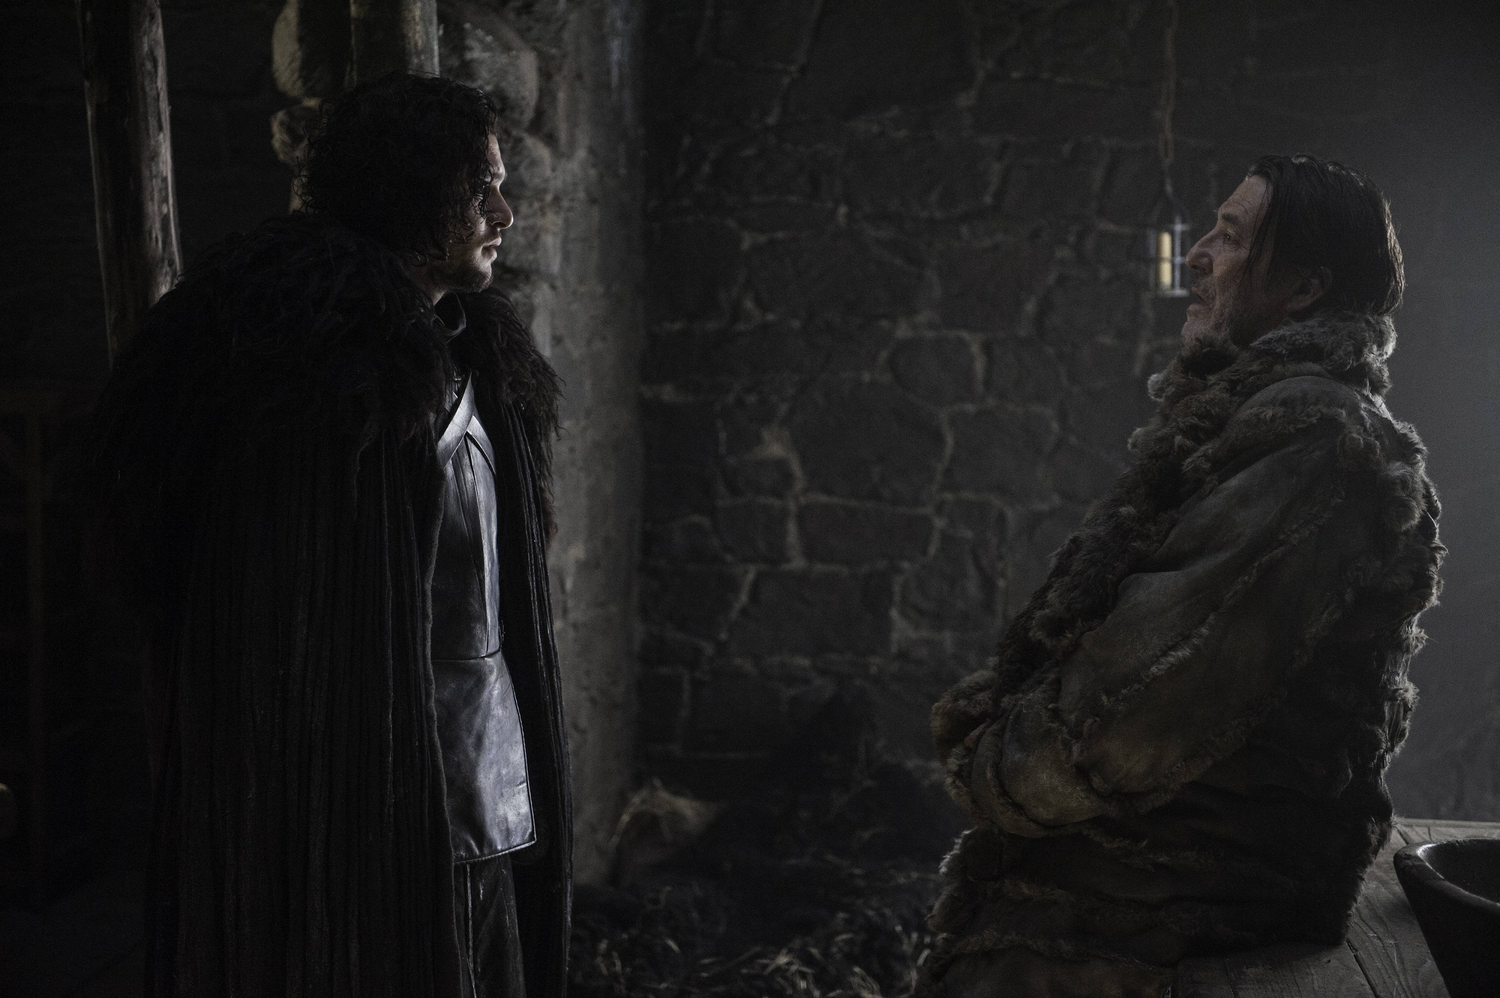 Jon and Mance